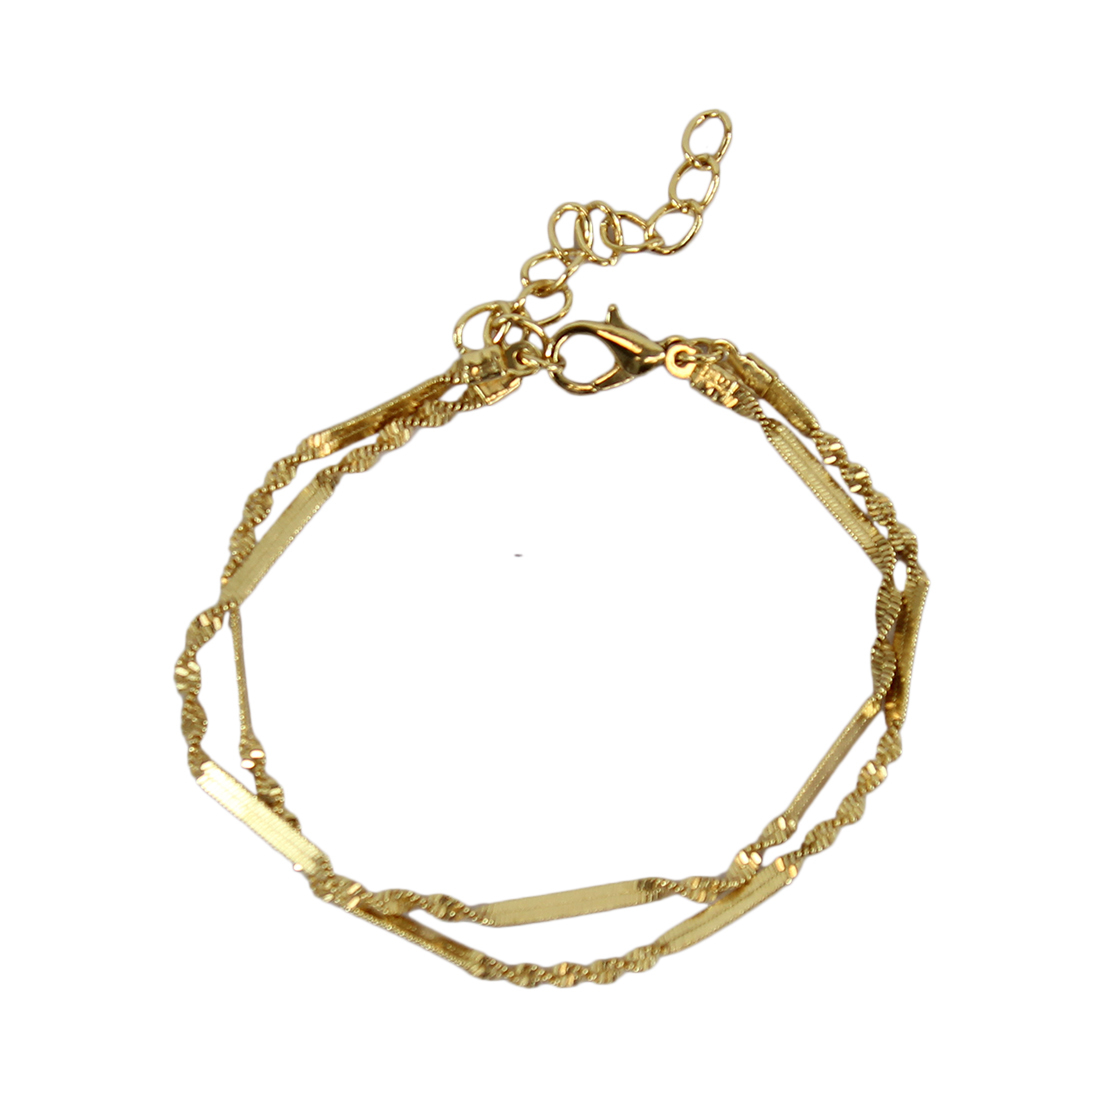 Twist chain elegant bracelet